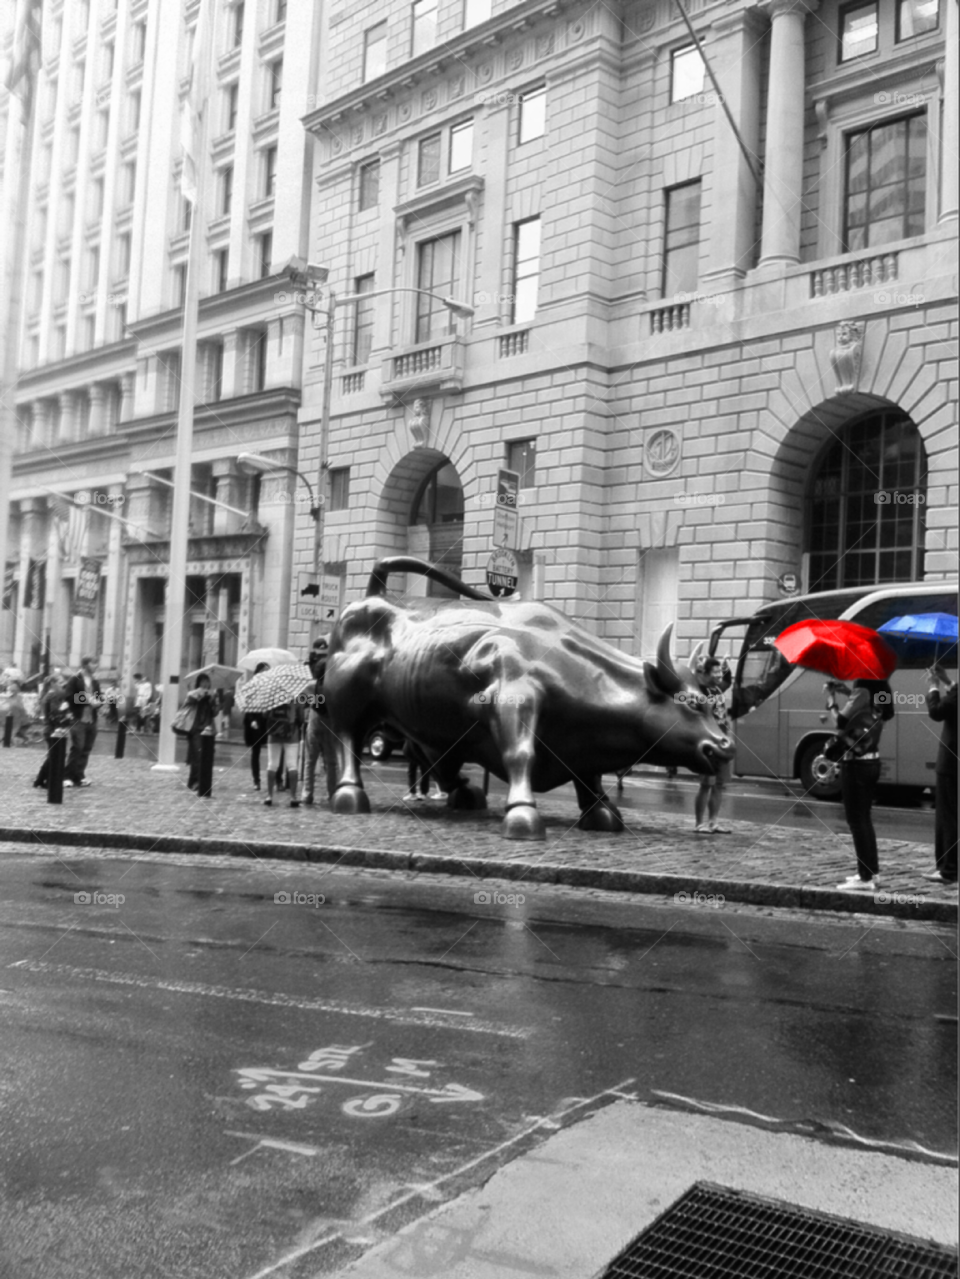 Wall Street Bull - Rainy day - financial district, New York City. Rainy day umbrellas- financial district, New York City